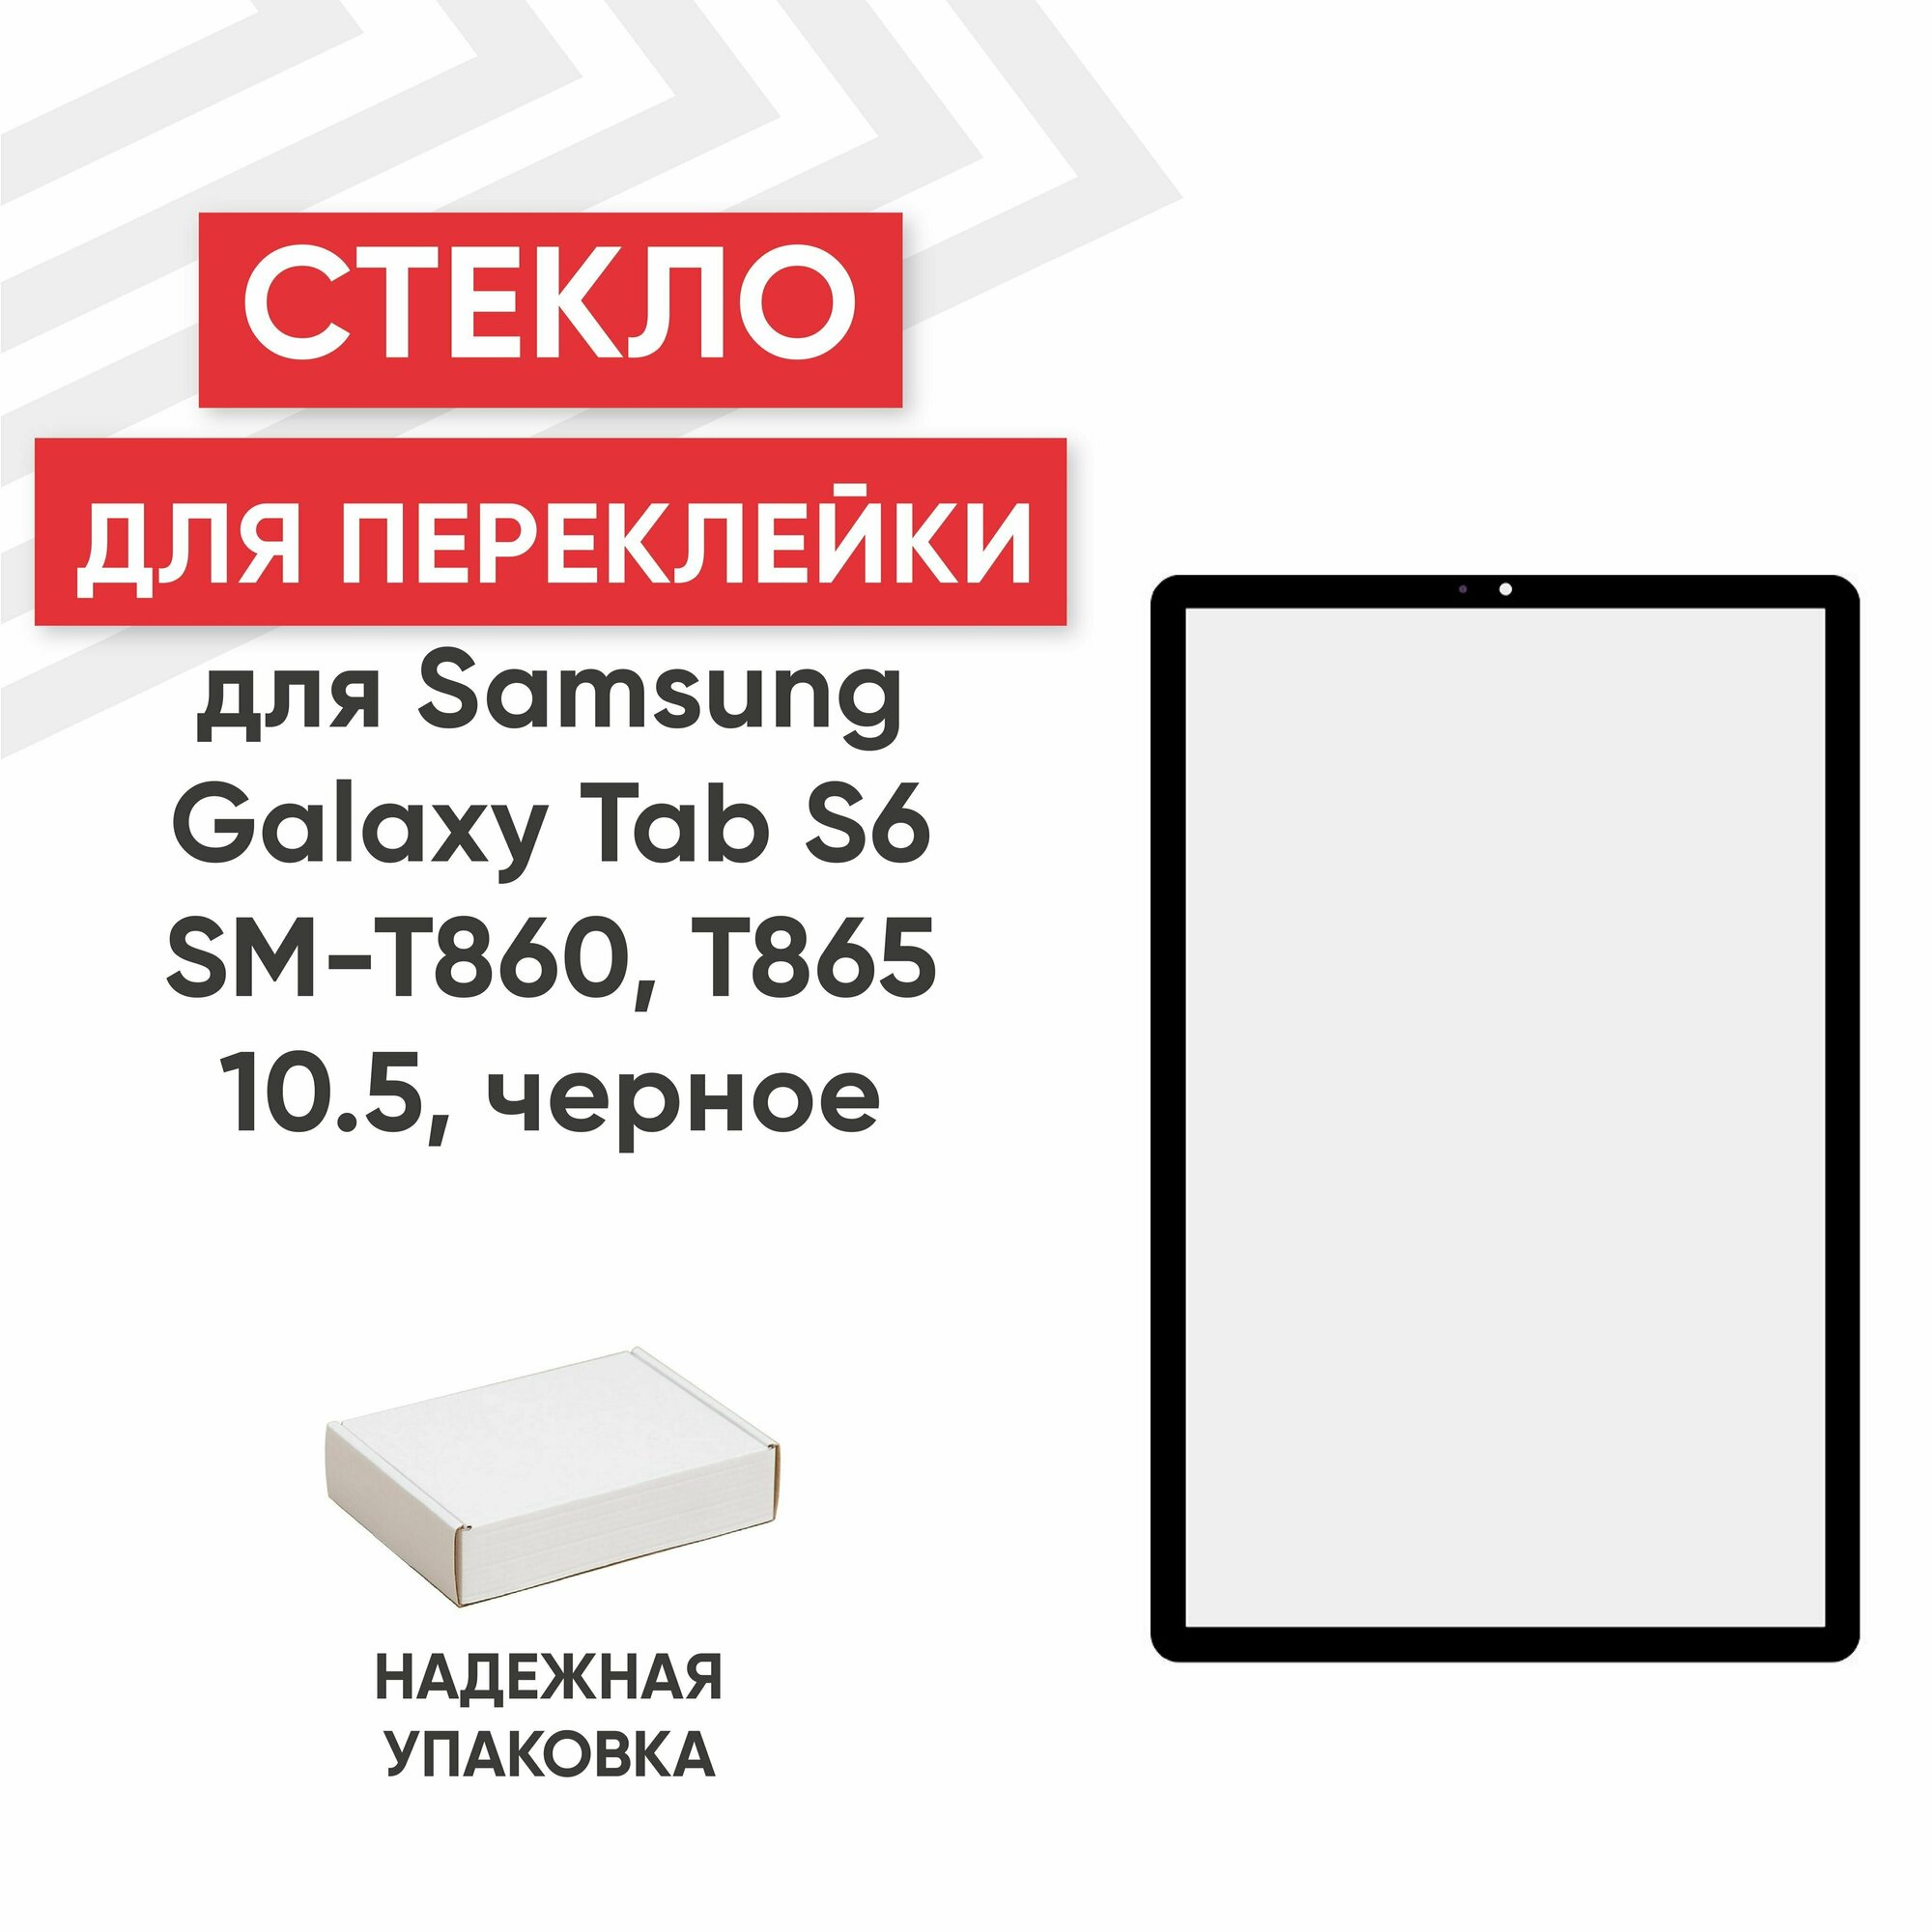 Стекло Ragex для переклейки дисплея для планшета Galaxy Tab S6 (SM-T860/T865) 10.5" черный